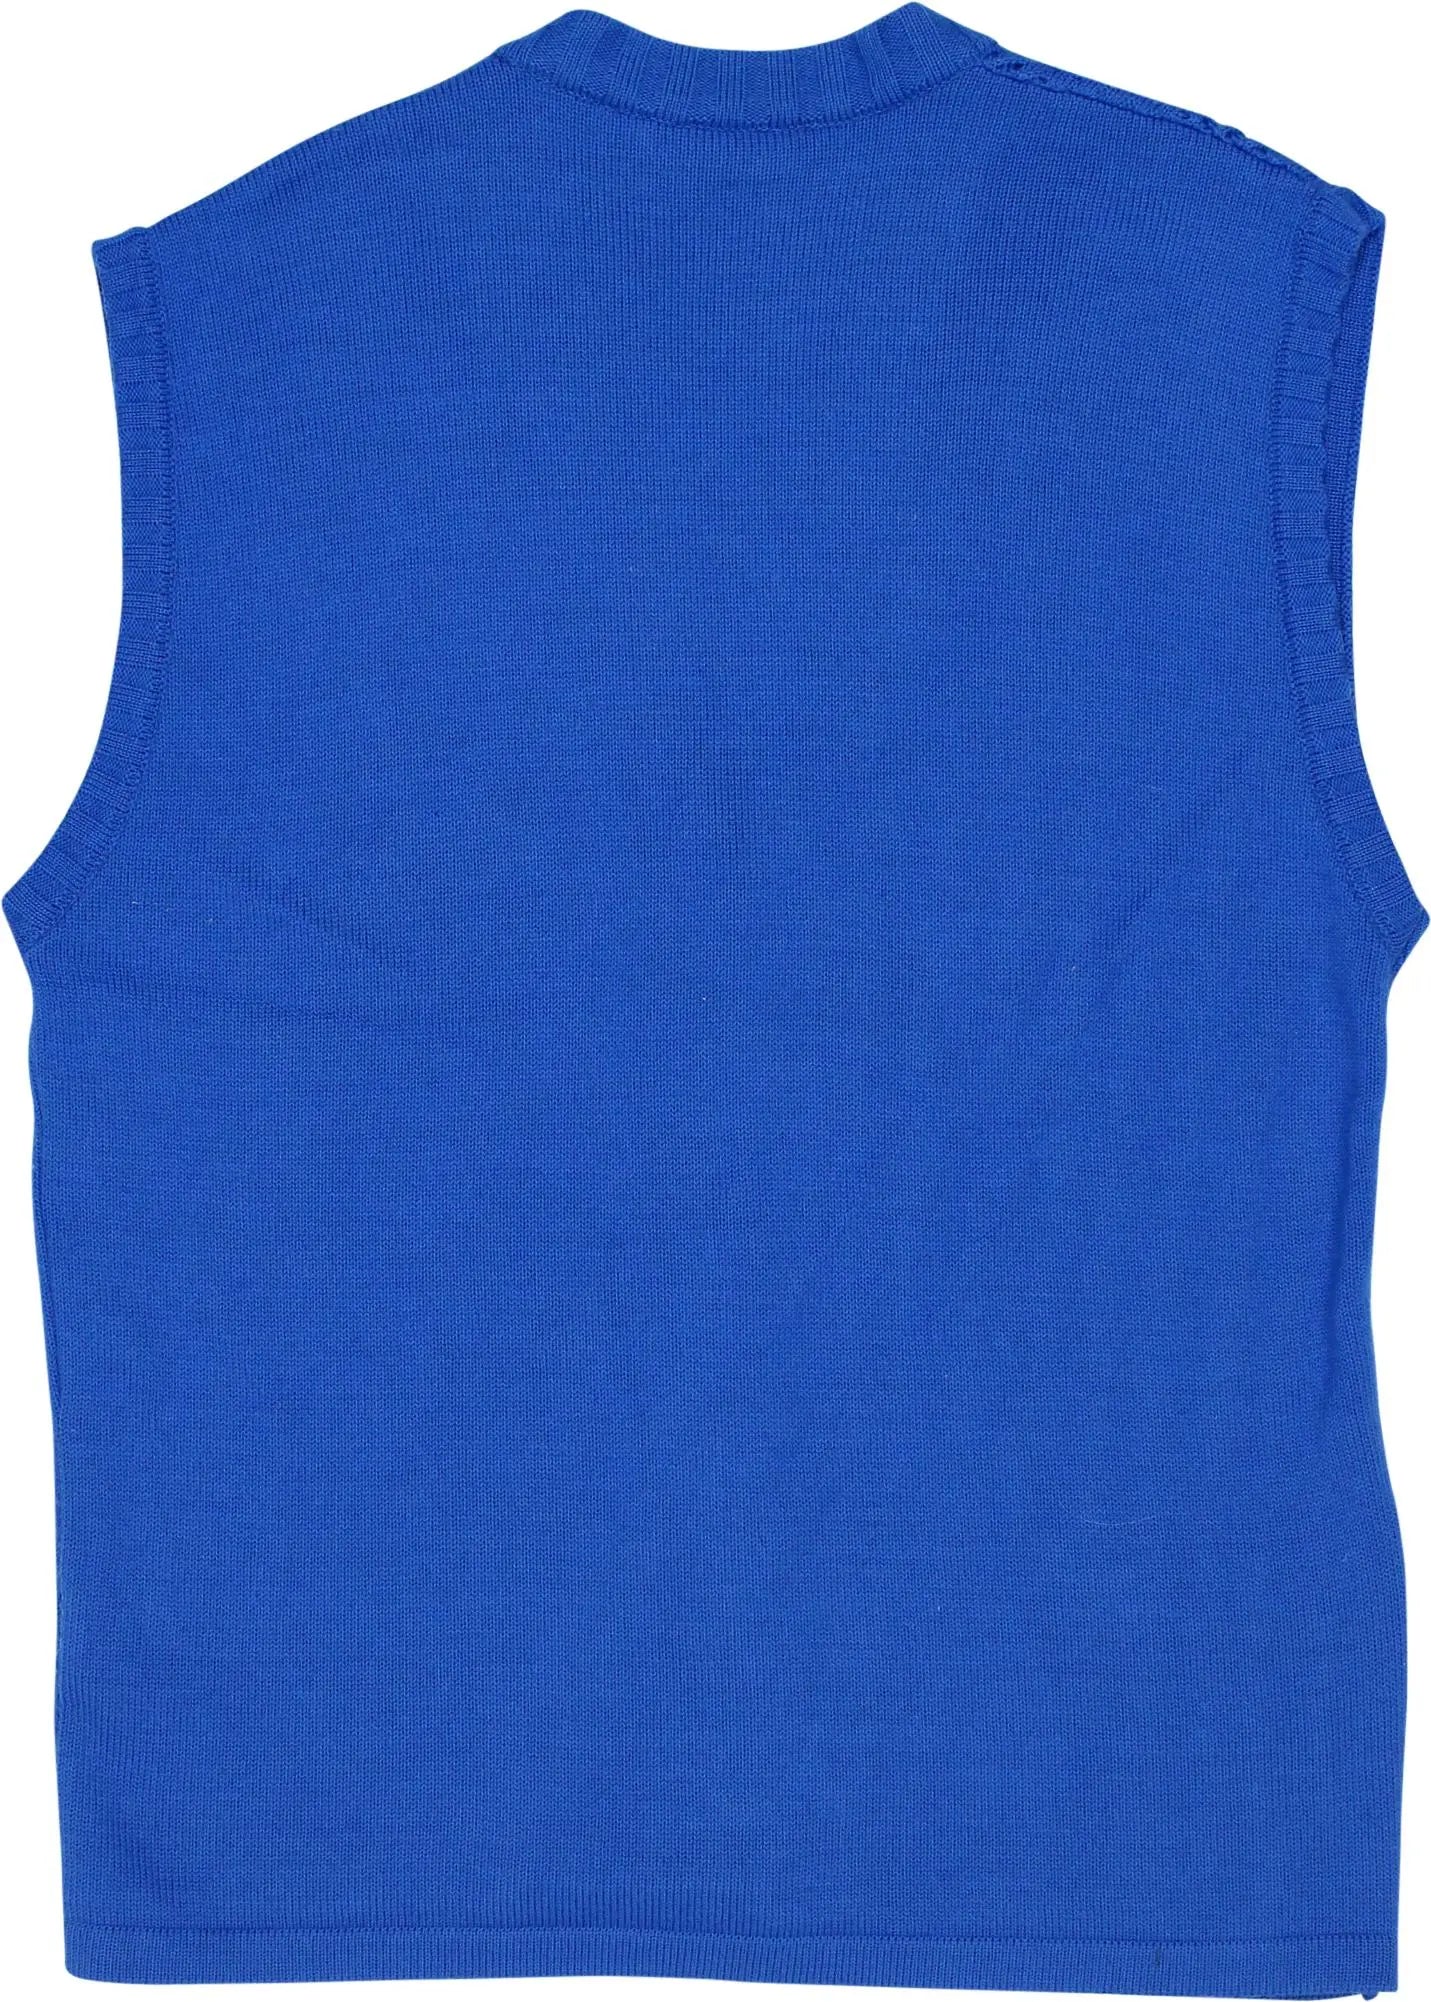 Aspa - Blue Buttoned Vest- ThriftTale.com - Vintage and second handclothing